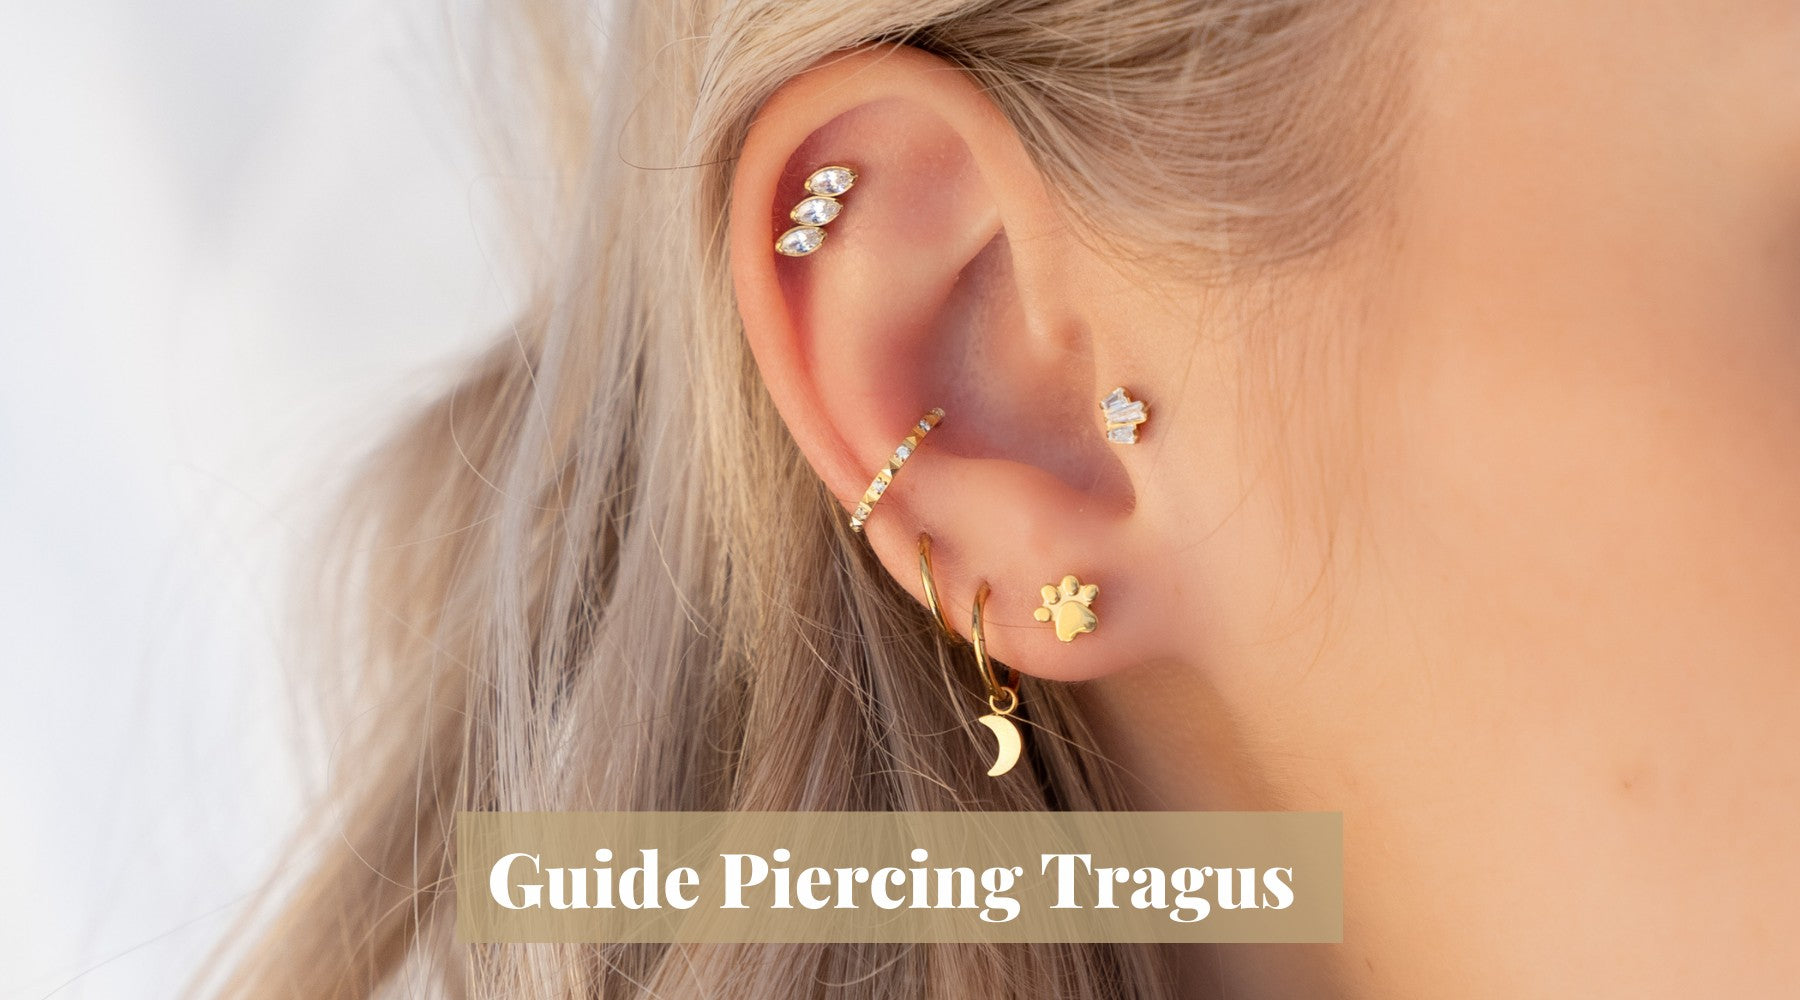 Tragus pain, - obsidian piercing